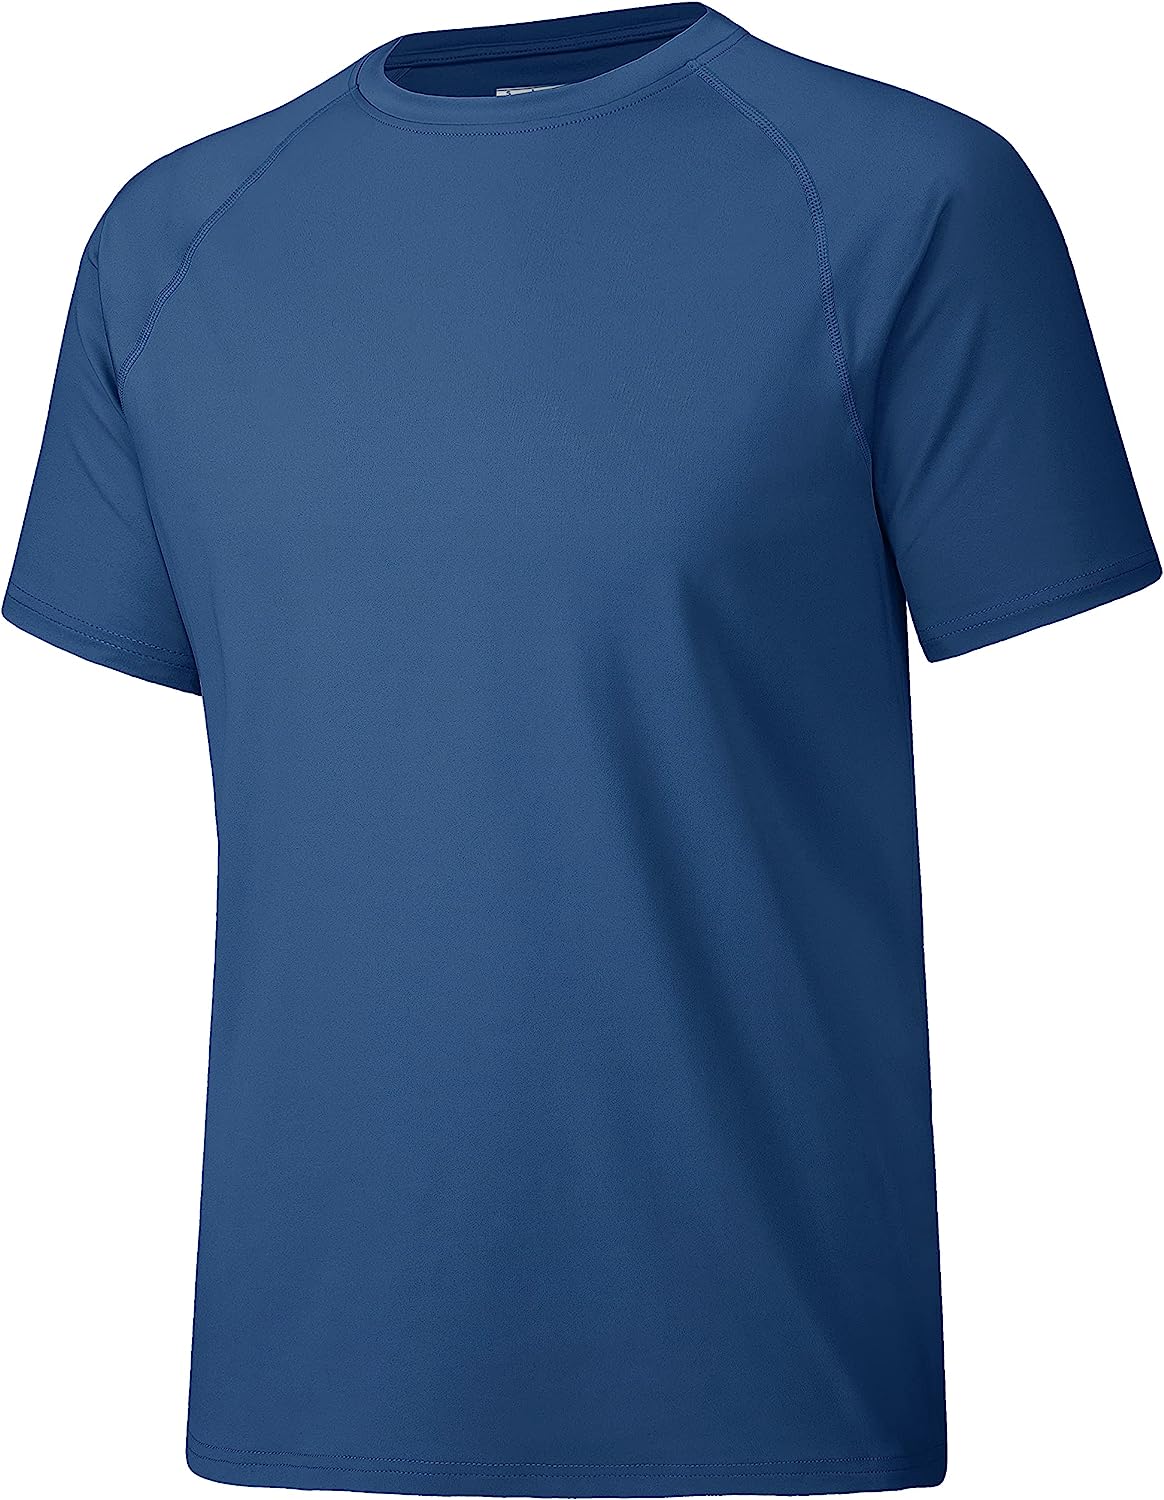 MAGCOMSEN Men's Short Sleeve T-Shirt Quick Dry UPF 50+ Athletic